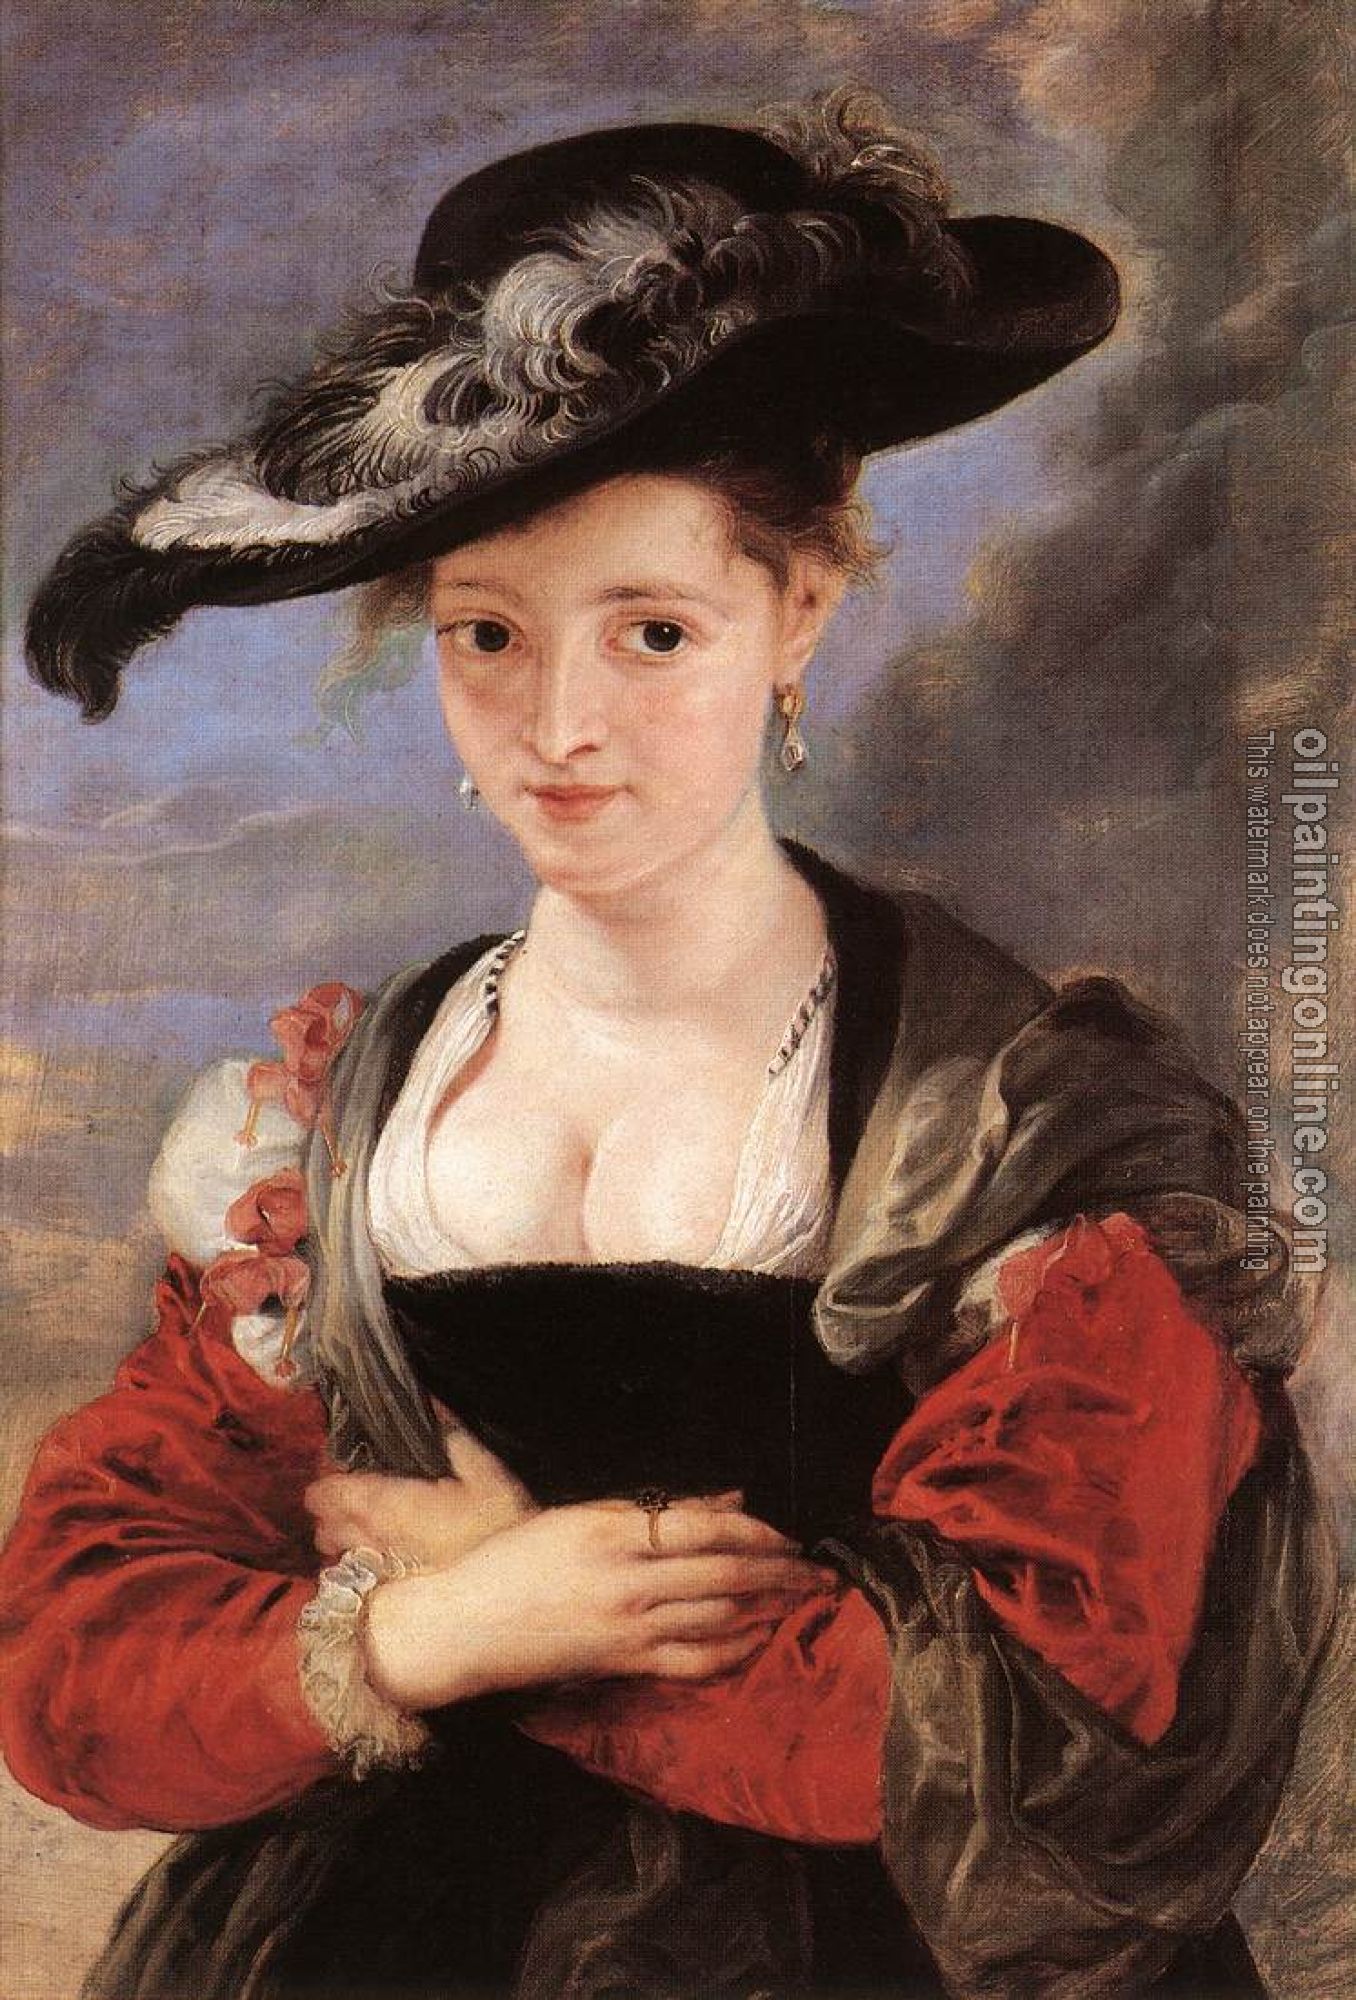 Rubens, Peter Paul - The Straw Hat